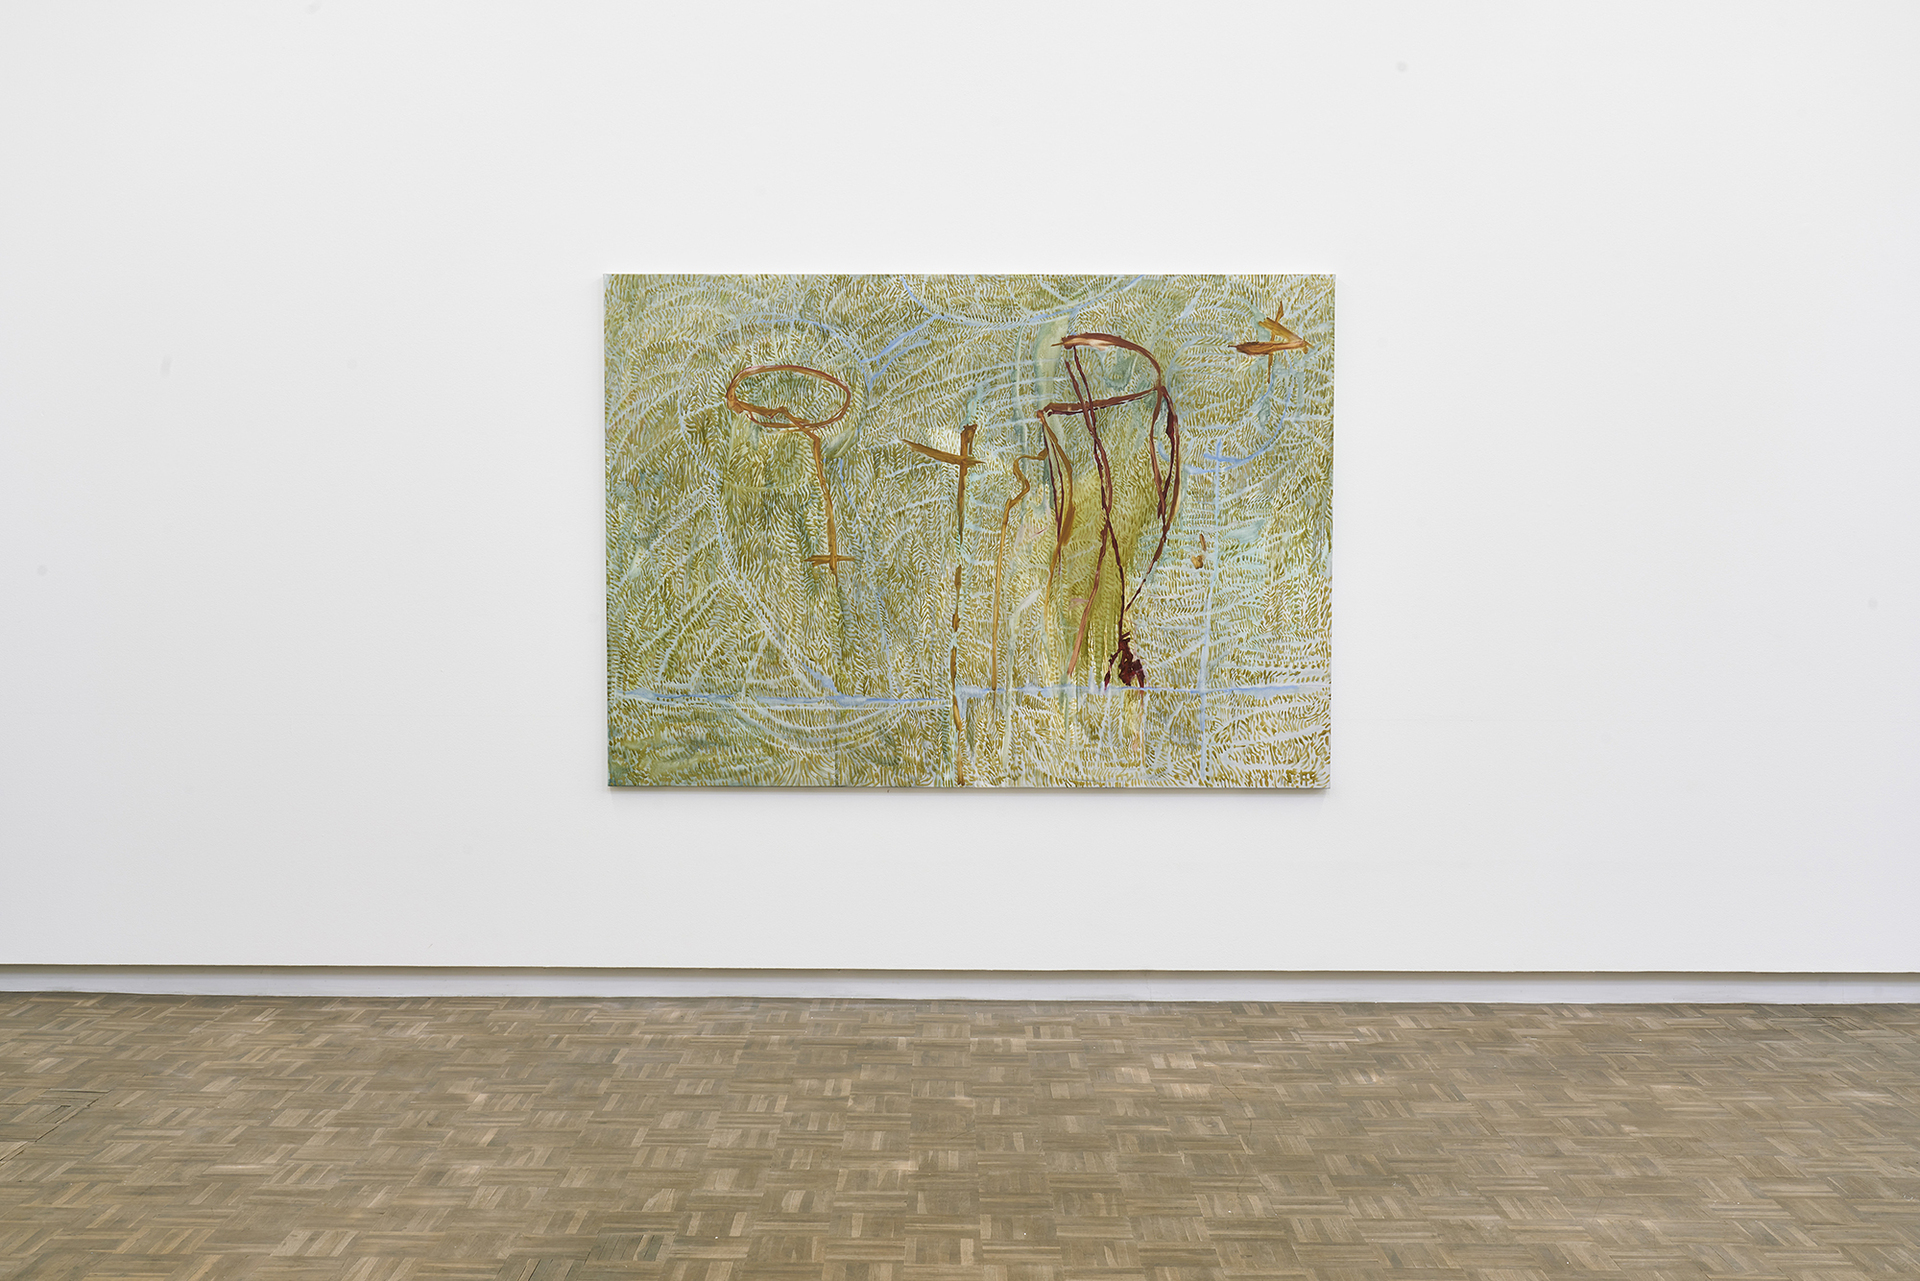 Achraf Touloub, Al Zuhur, 2021-2022 | Oil on canvas, 220 x 155 x 3,5 cm (installation view)